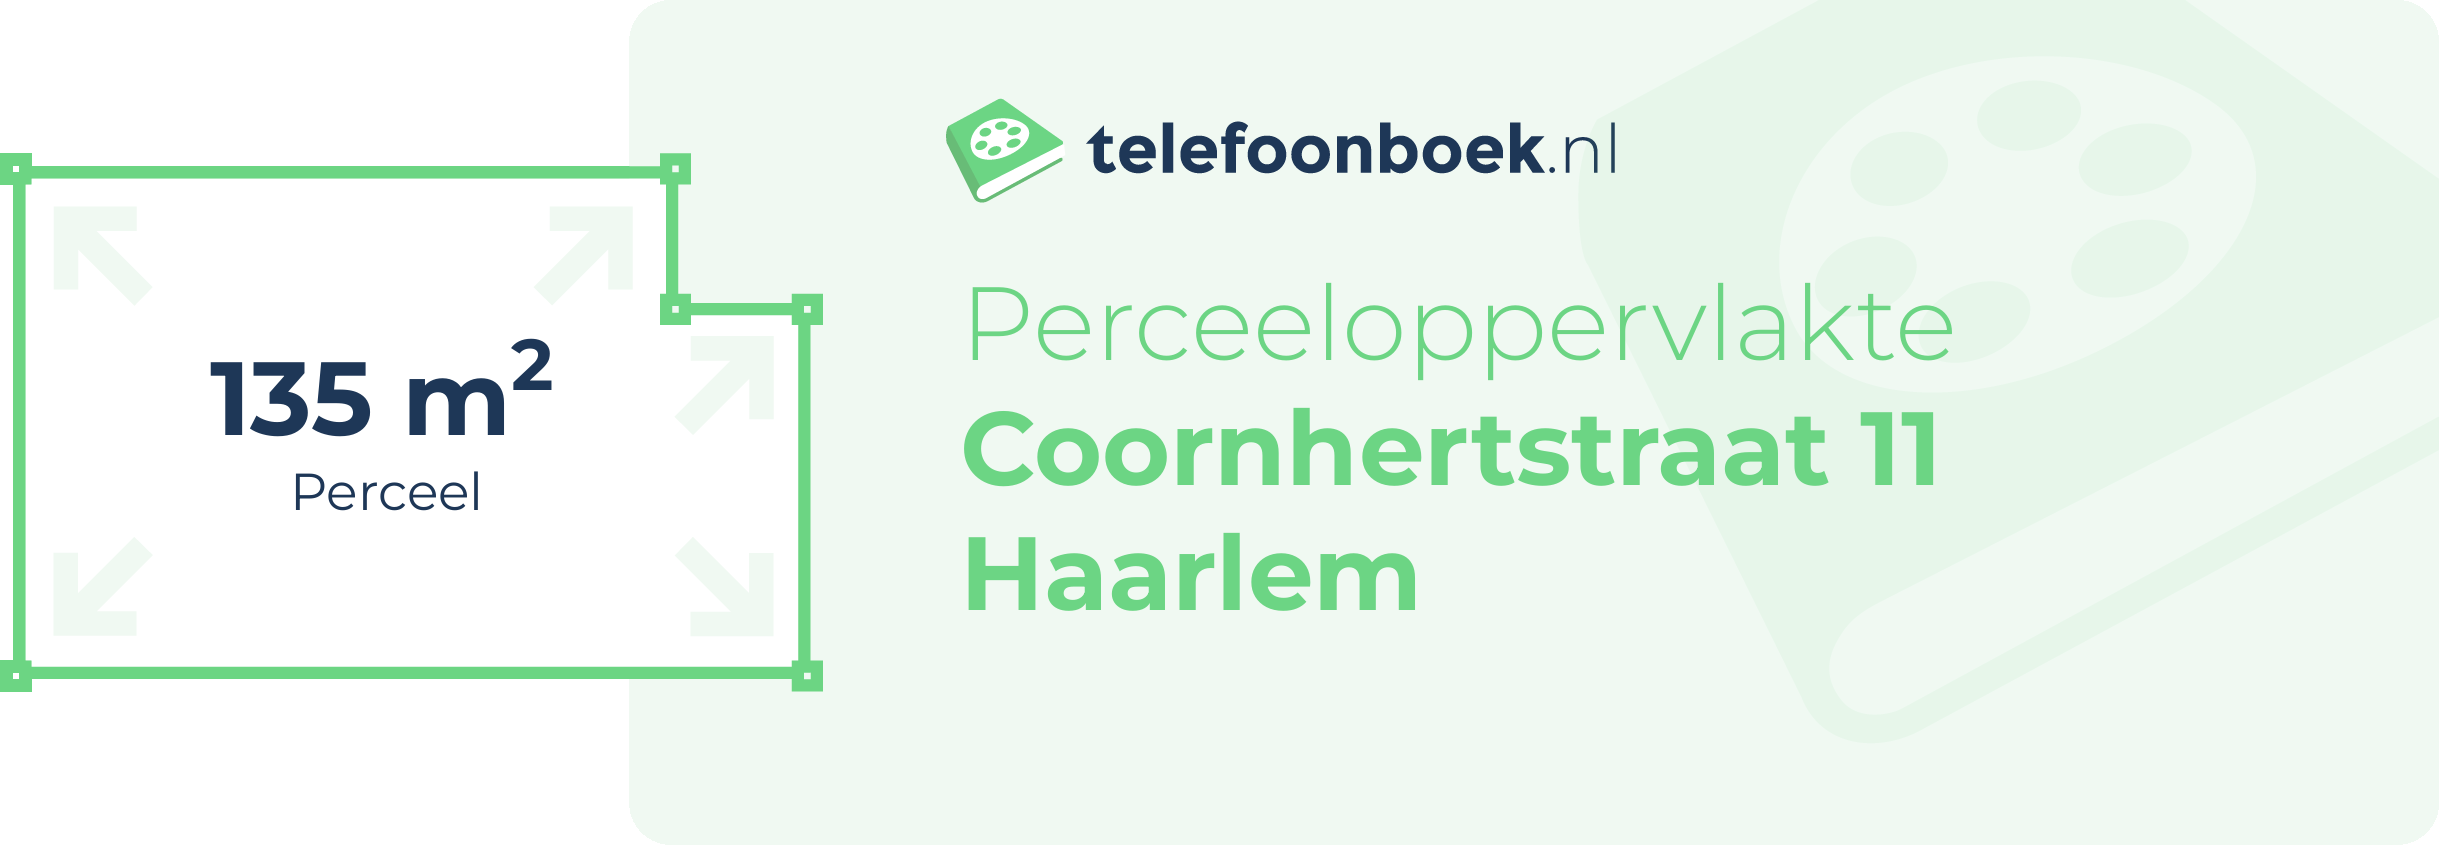 Perceeloppervlakte Coornhertstraat 11 Haarlem